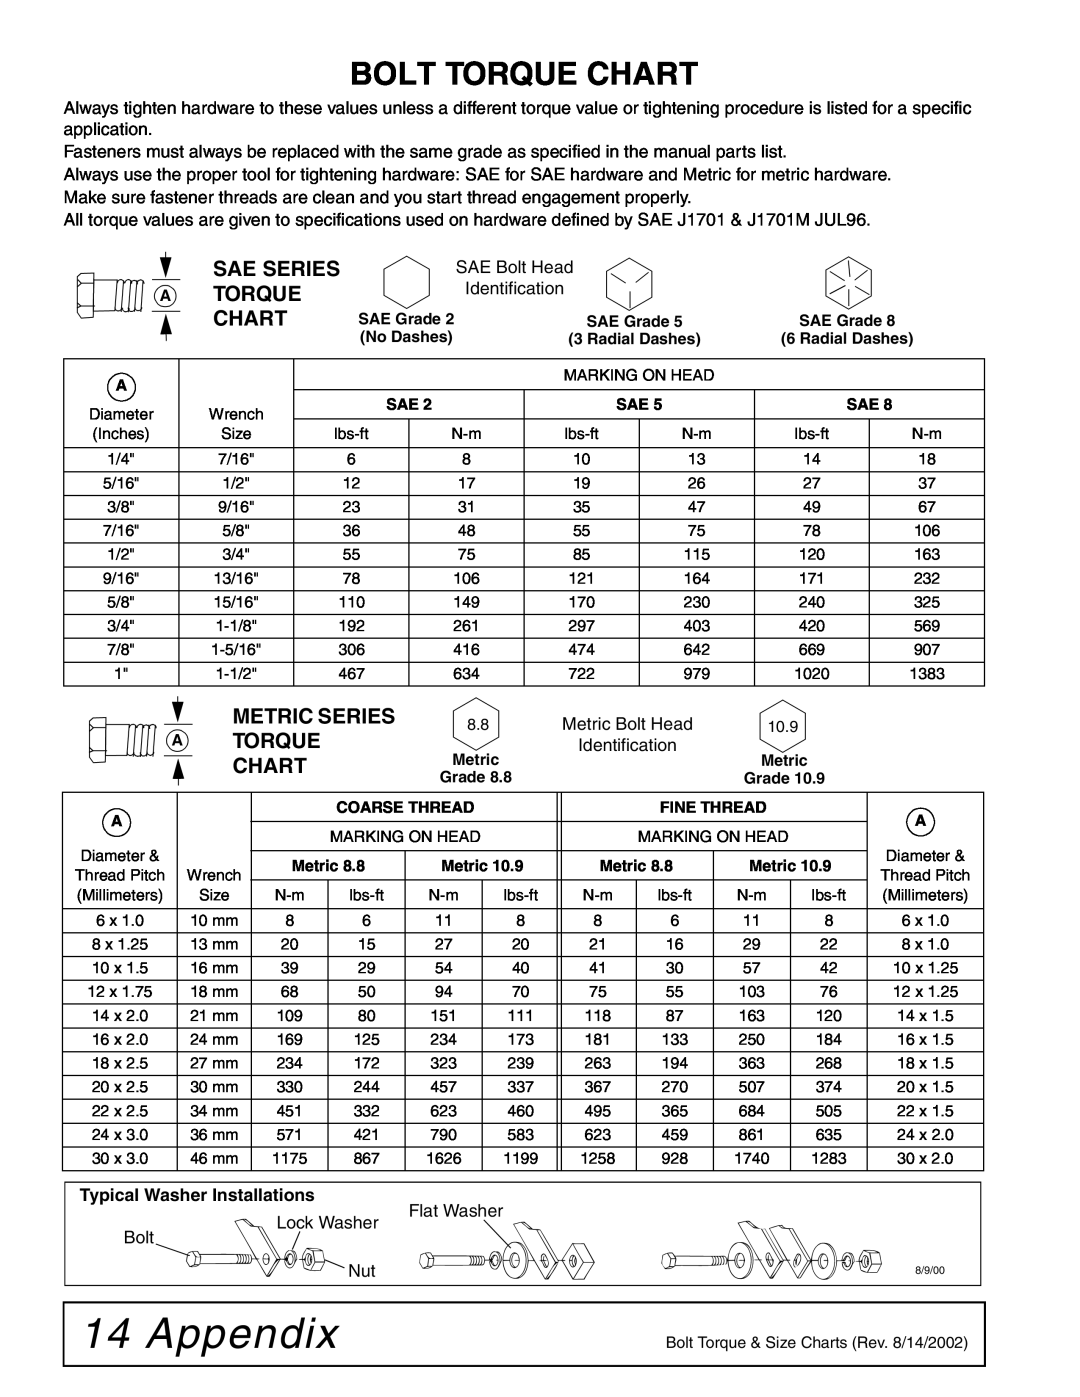 Woods Equipment D5221T Appendix, Bolt Torque Chart, Sae Series A Torque Chart, Metric Series, Typical Washer Installations 